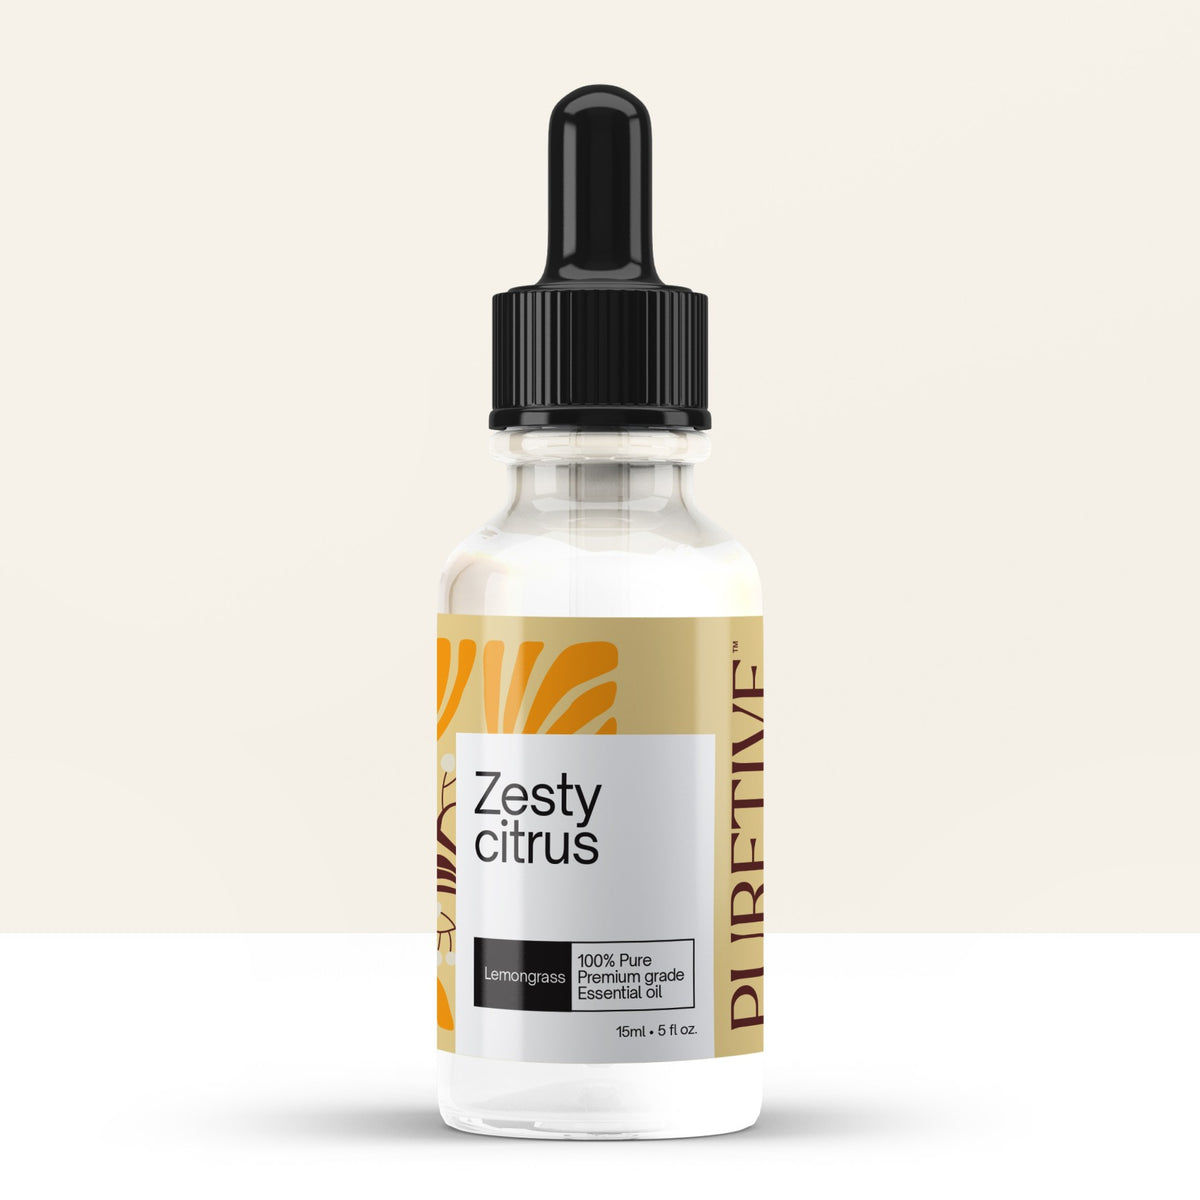 Zesty Citrus- 100% Pure Lemongrass Oil